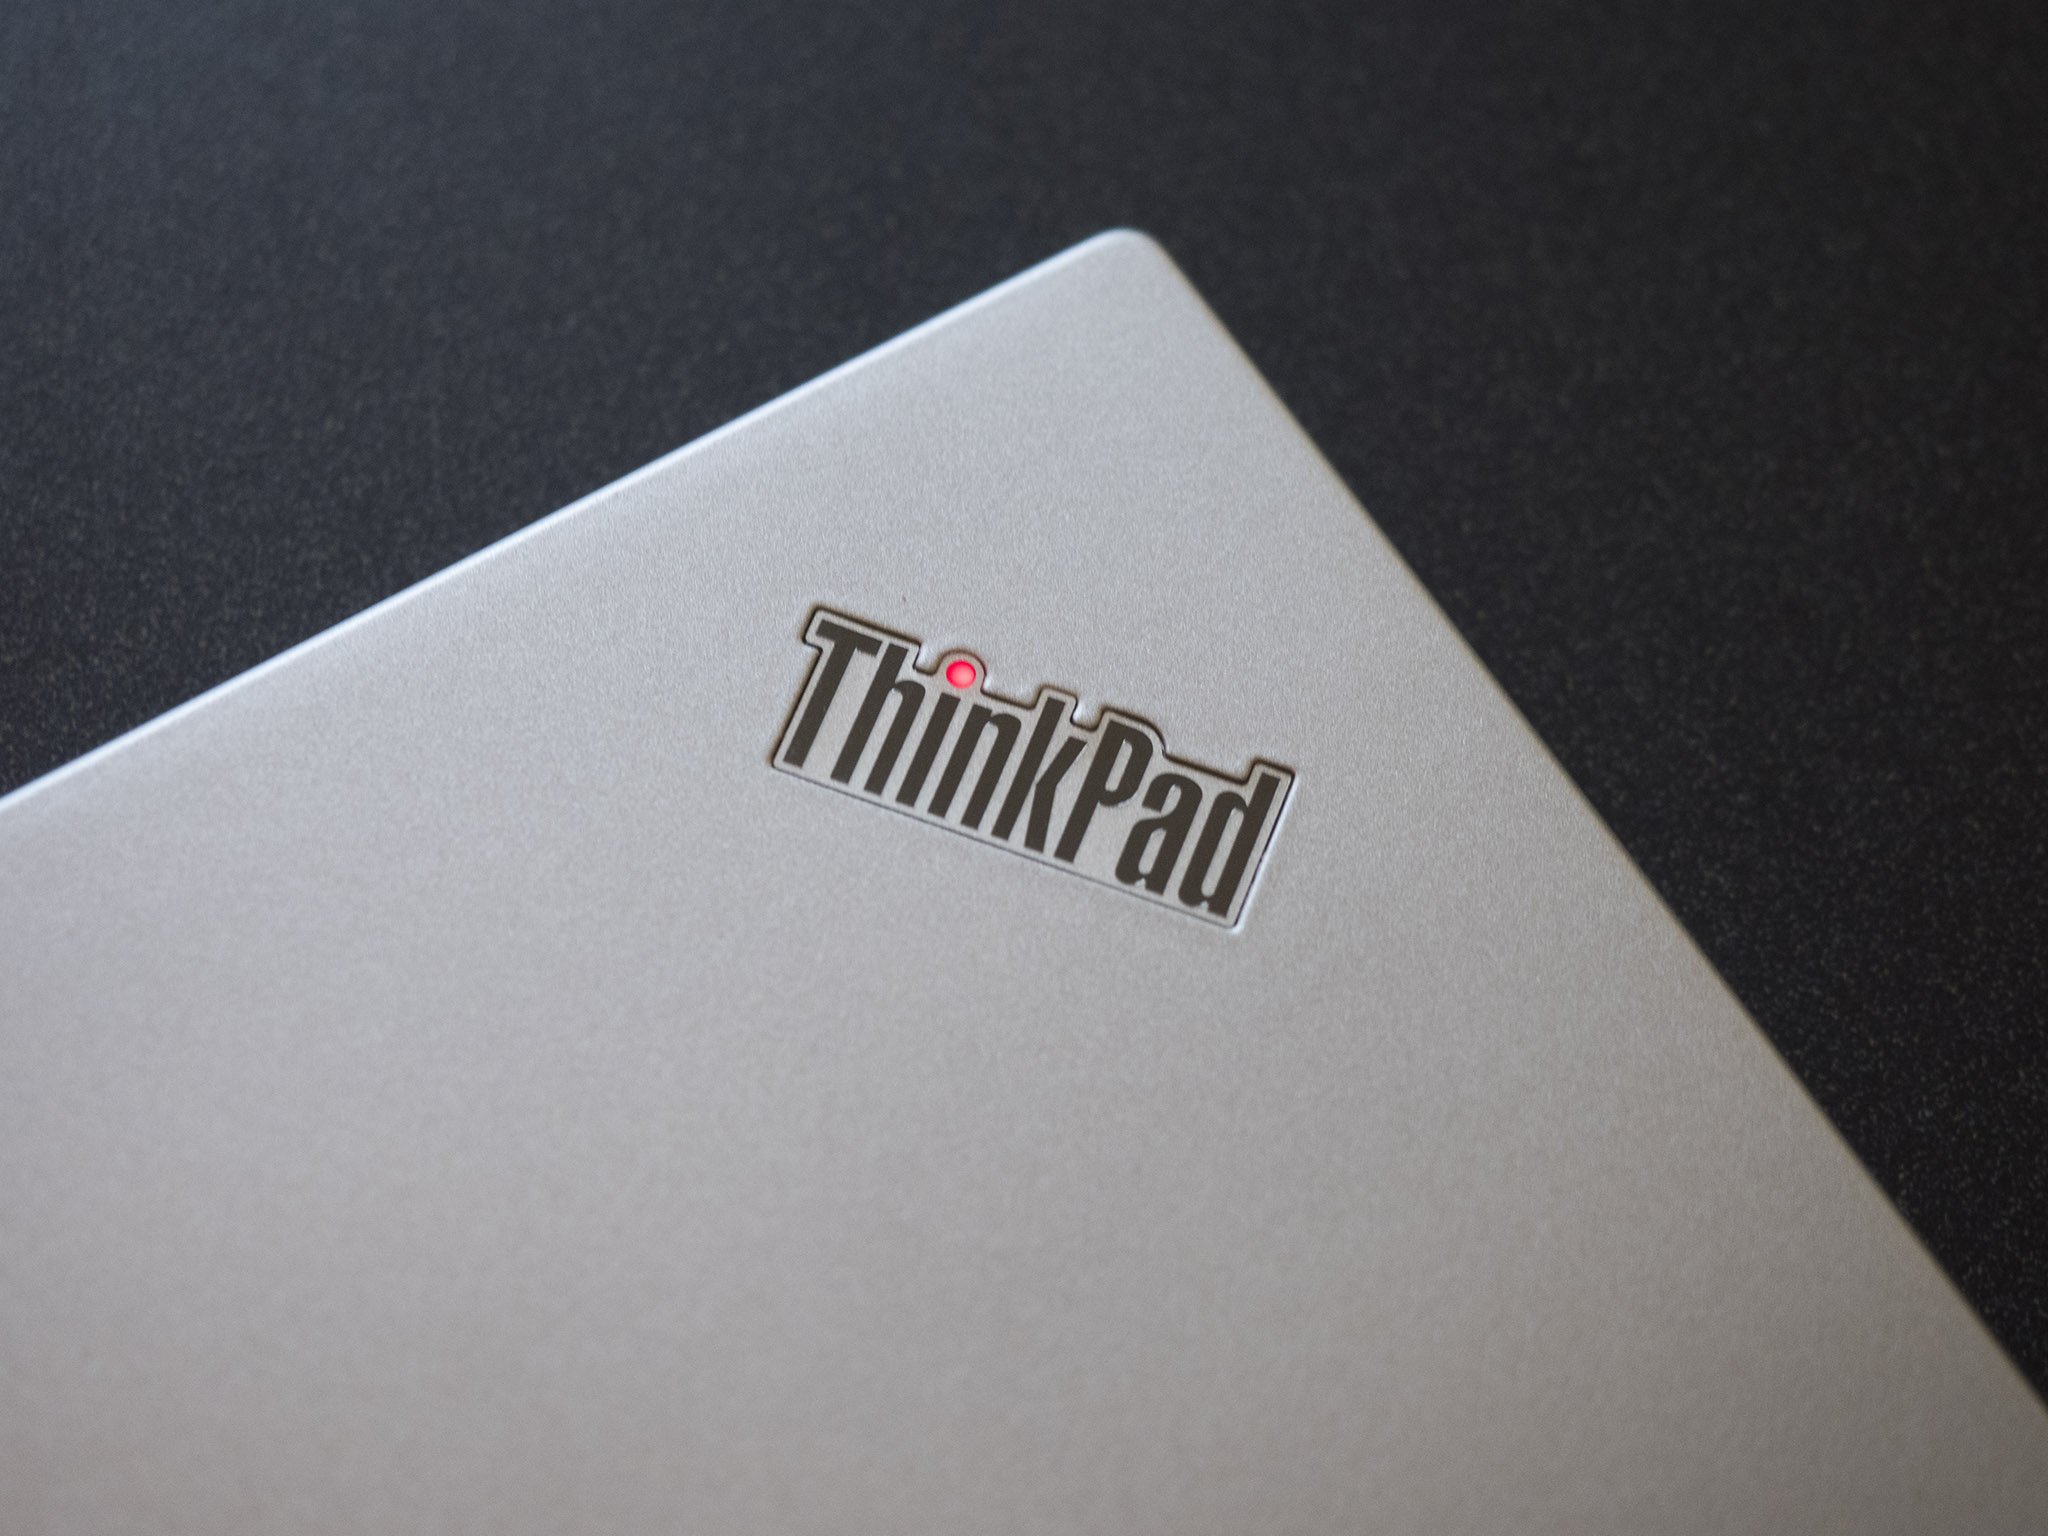 Lenovo recalls ThinkPad X1 Carbon laptops over fire risk